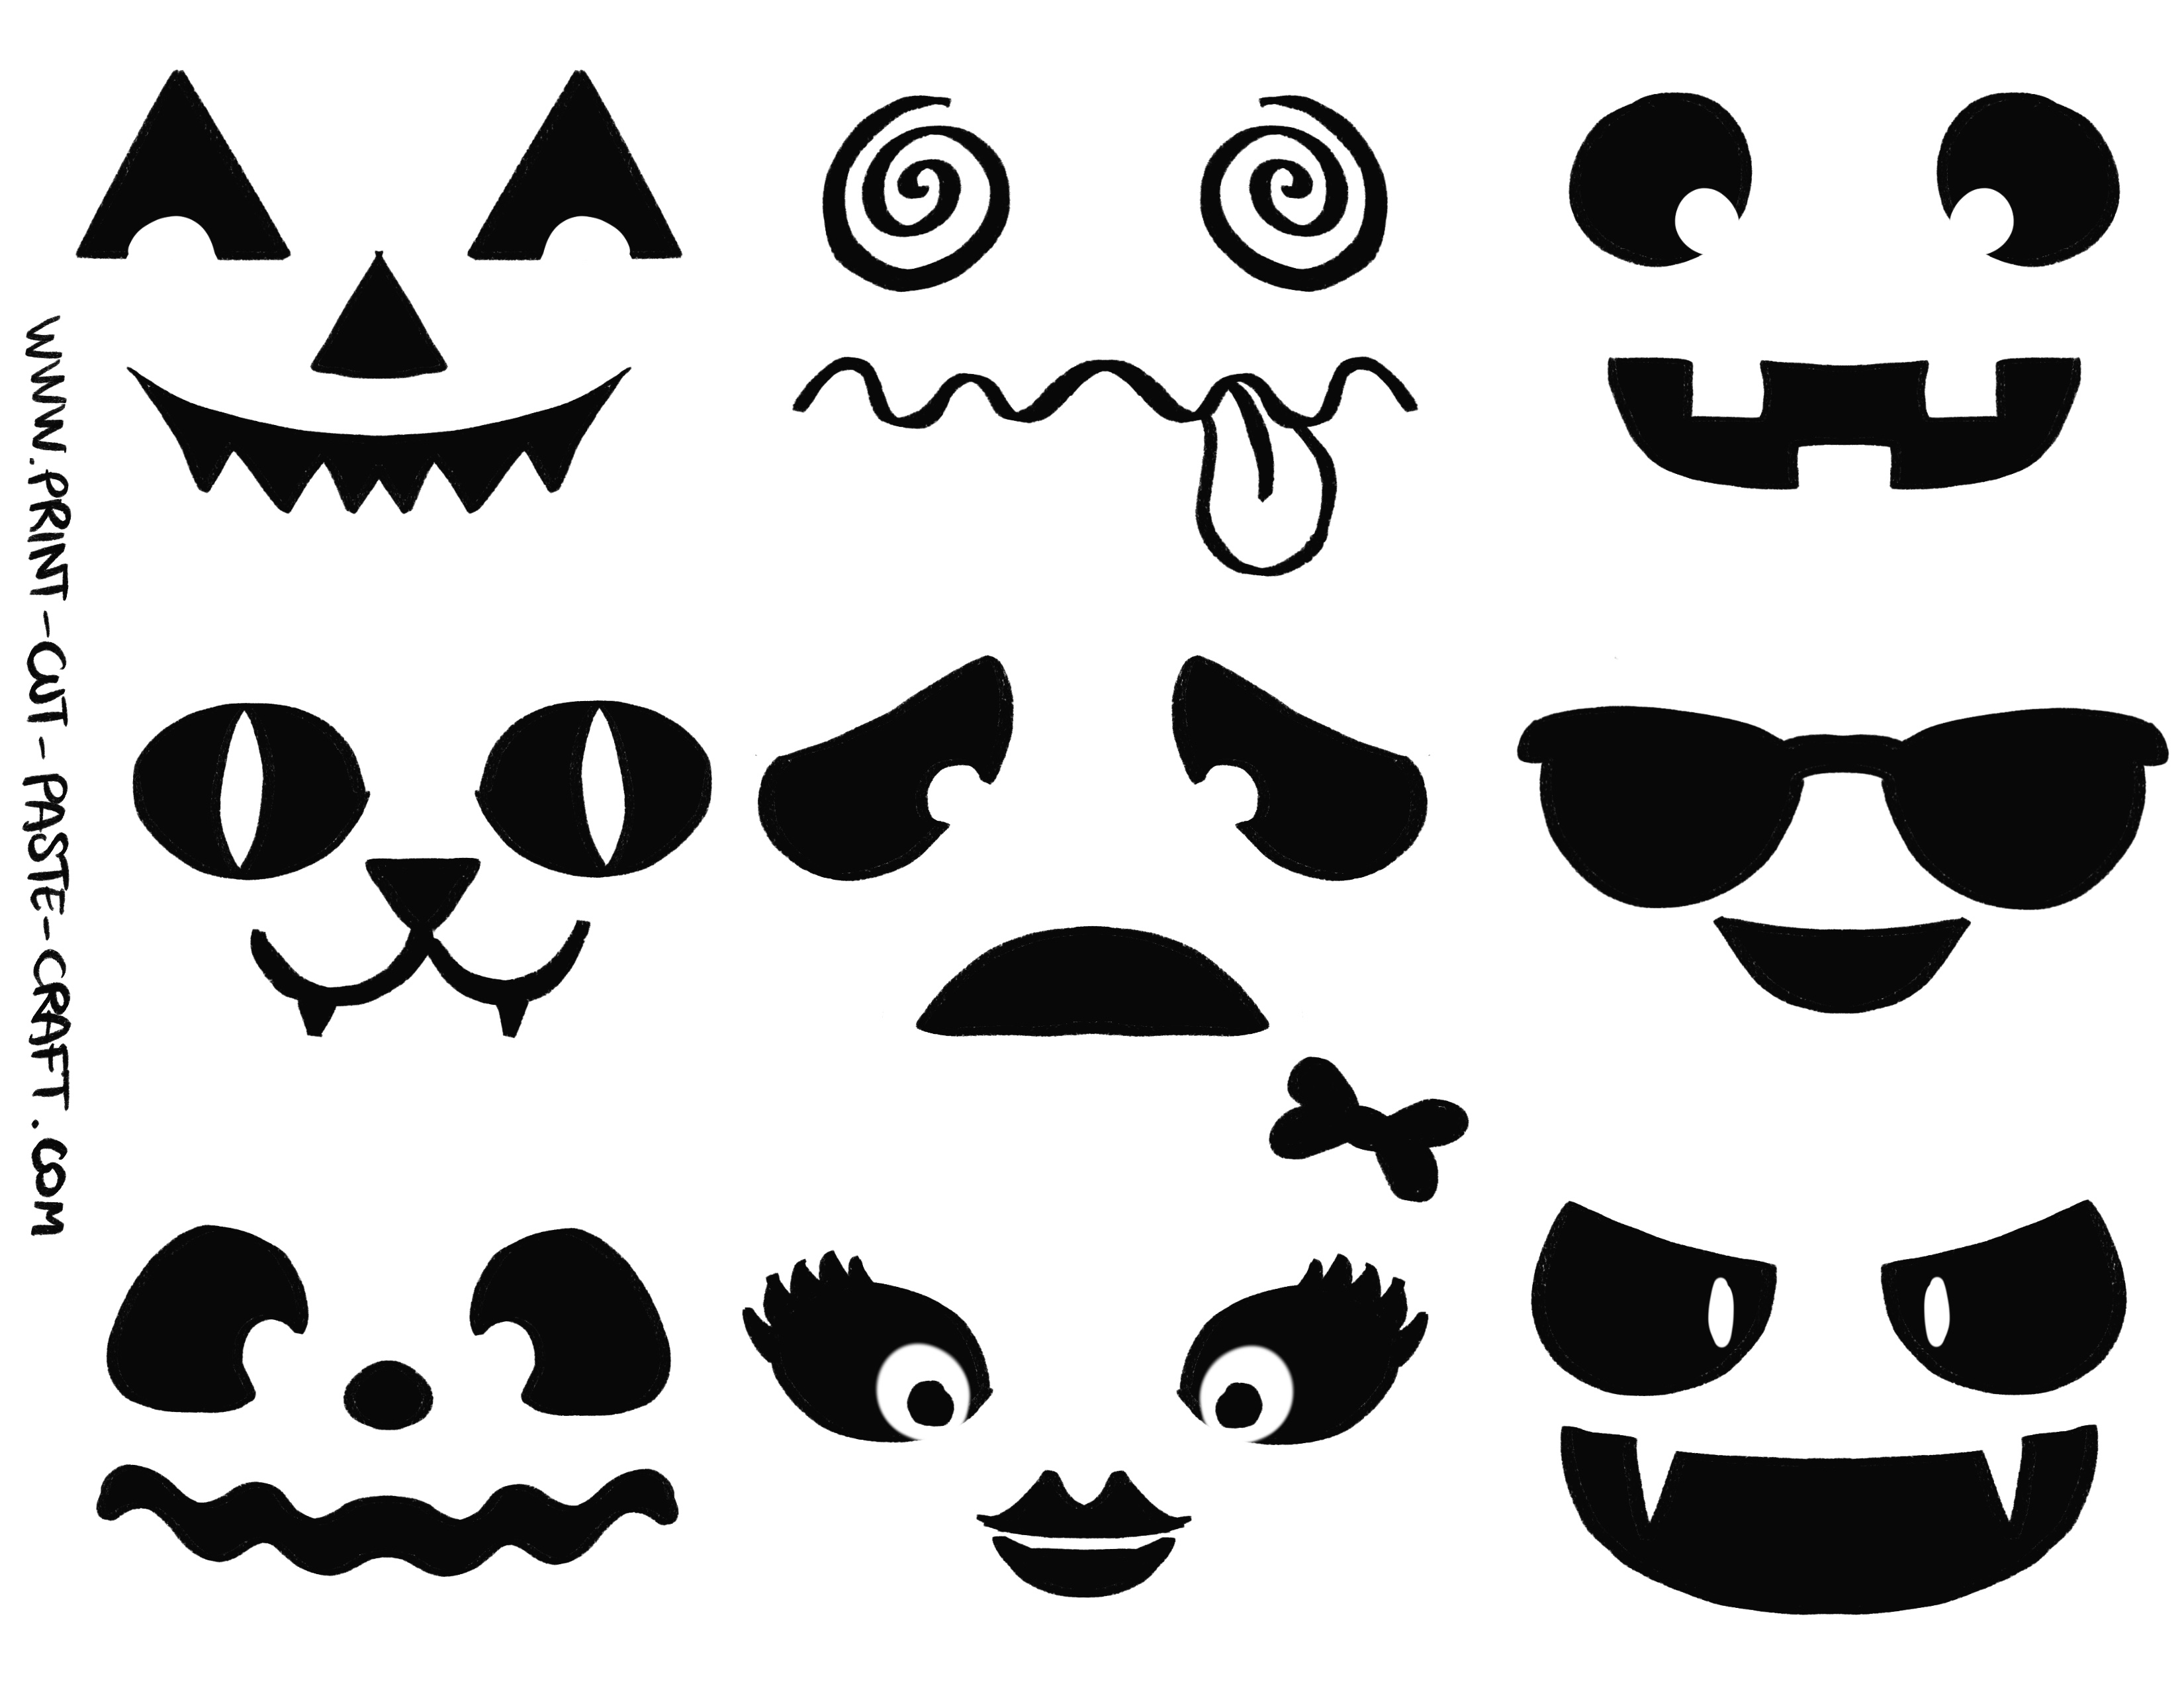 Free Printable Halloween Craft by Print-cut-paste-craft.com: Jack-O-Lantern Faces